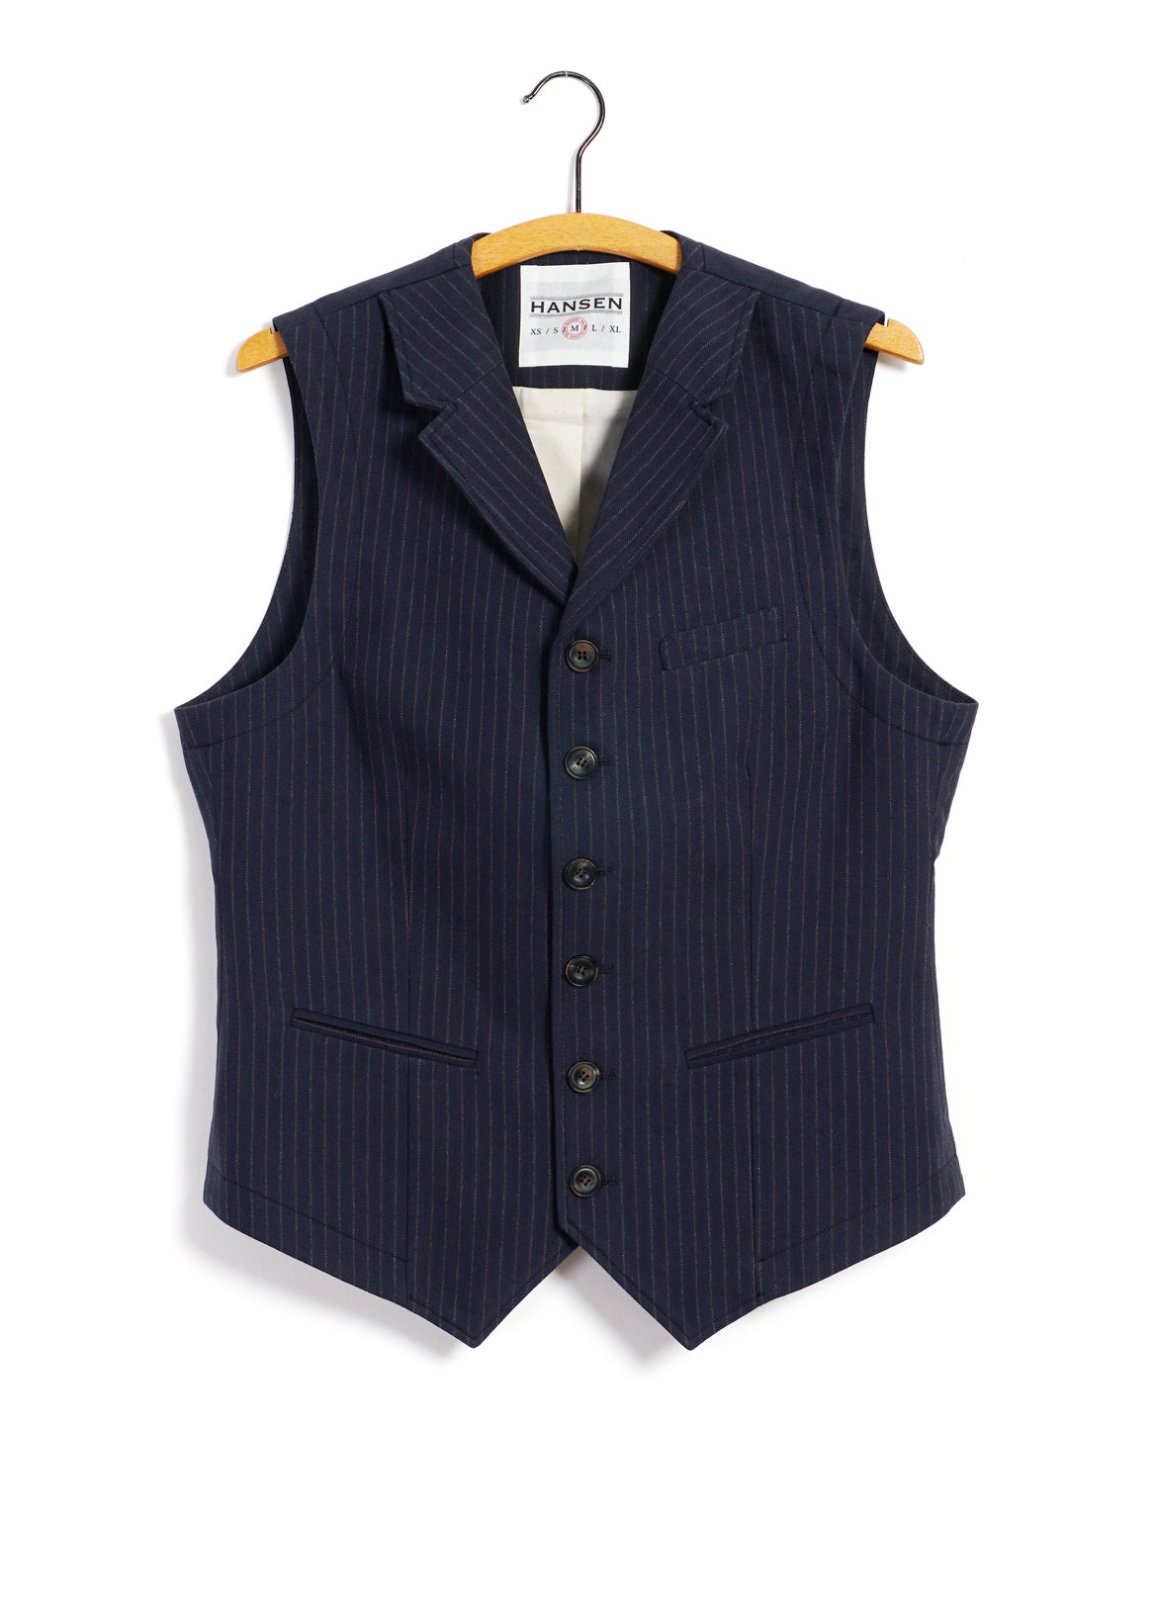 HANSEN GARMENTS - WILLIAM | Lapel Waistcoat | Blue Pin - HANSEN Garments